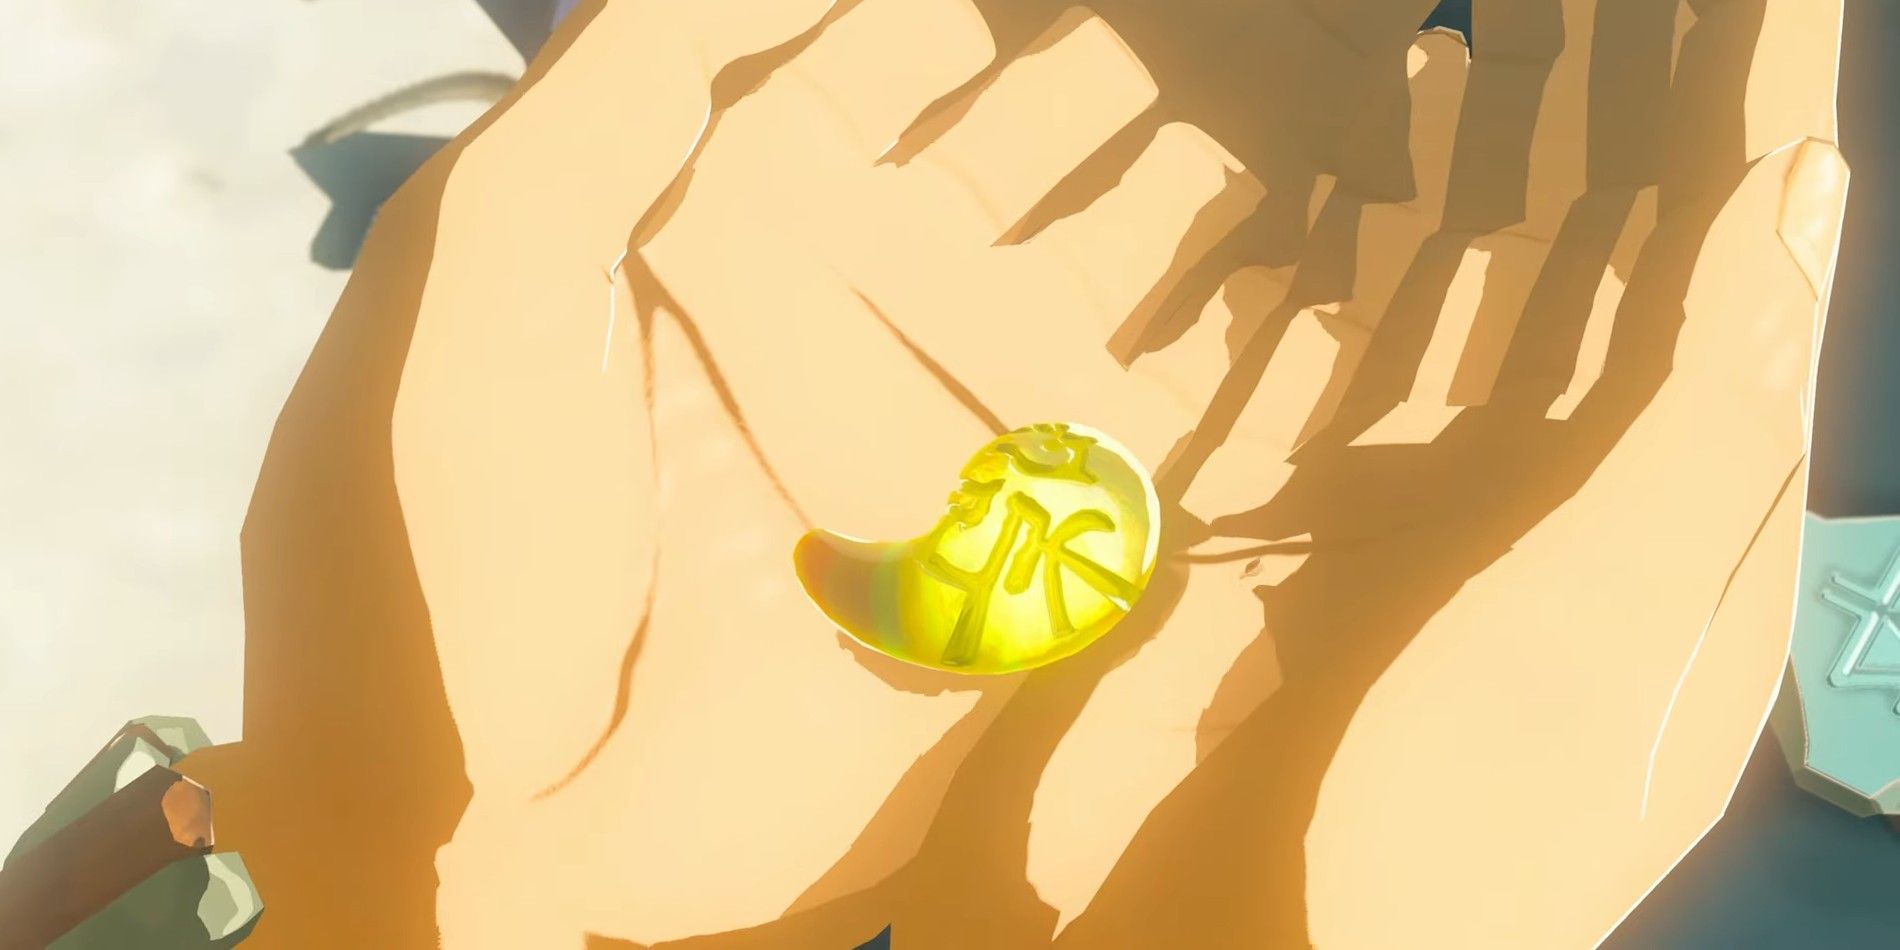 Zelda holding a yellow Tear in The Legend of Zelda: Tears of the Kingdom.